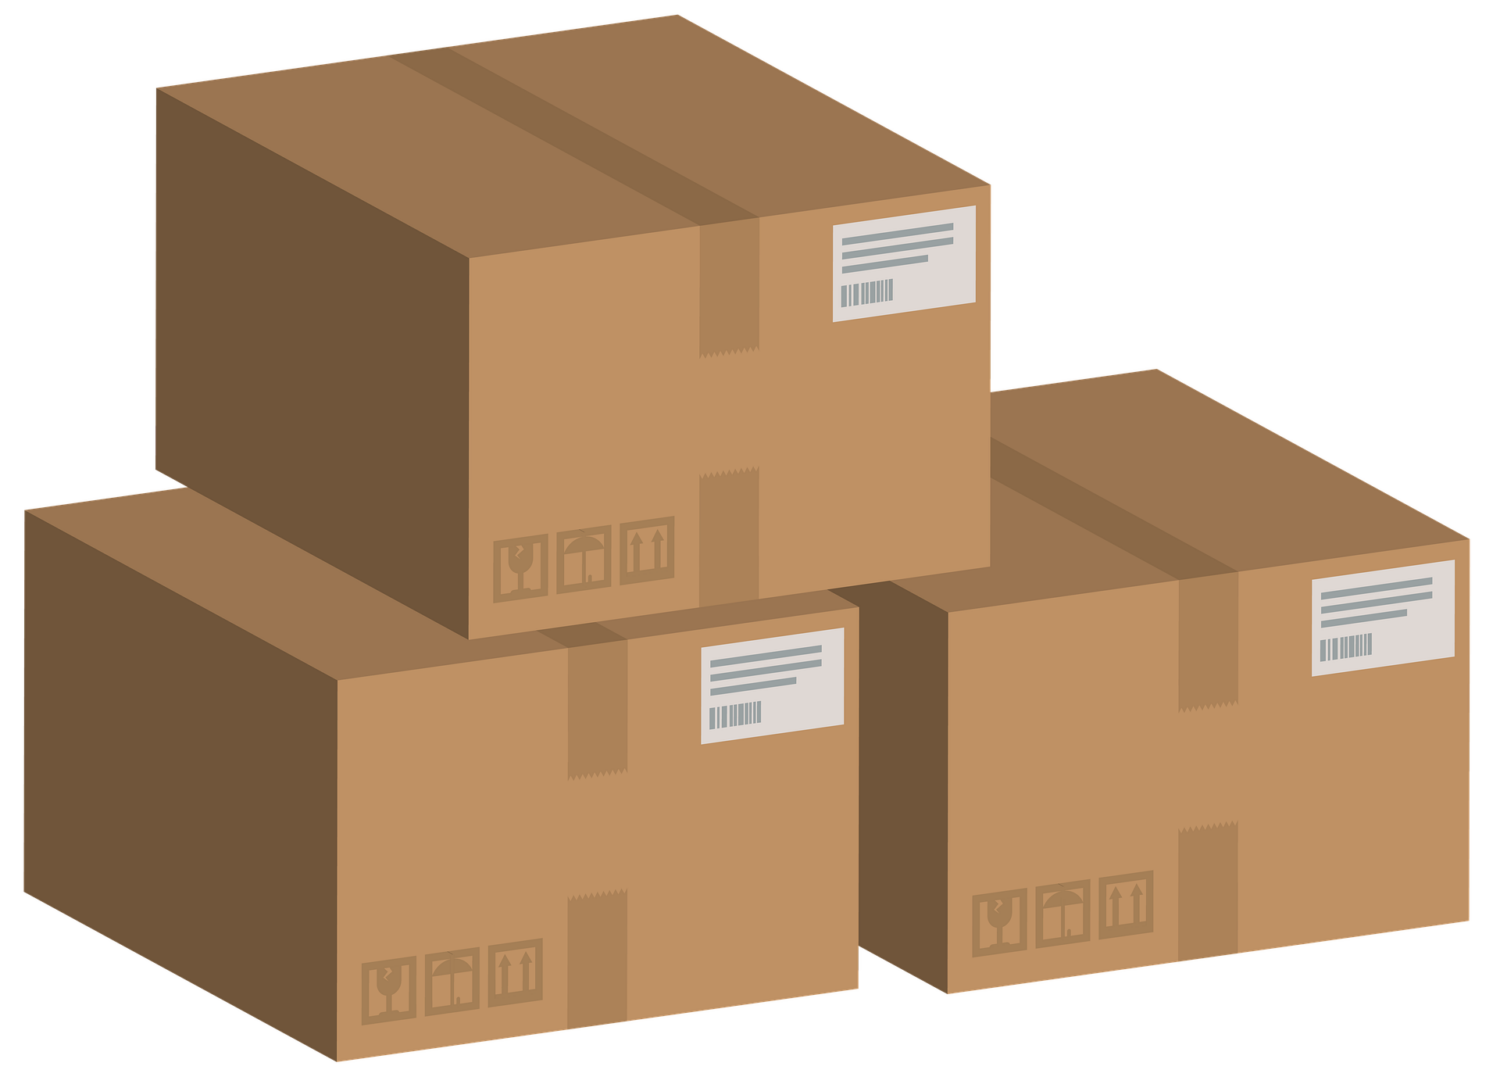 Three shipping boxes